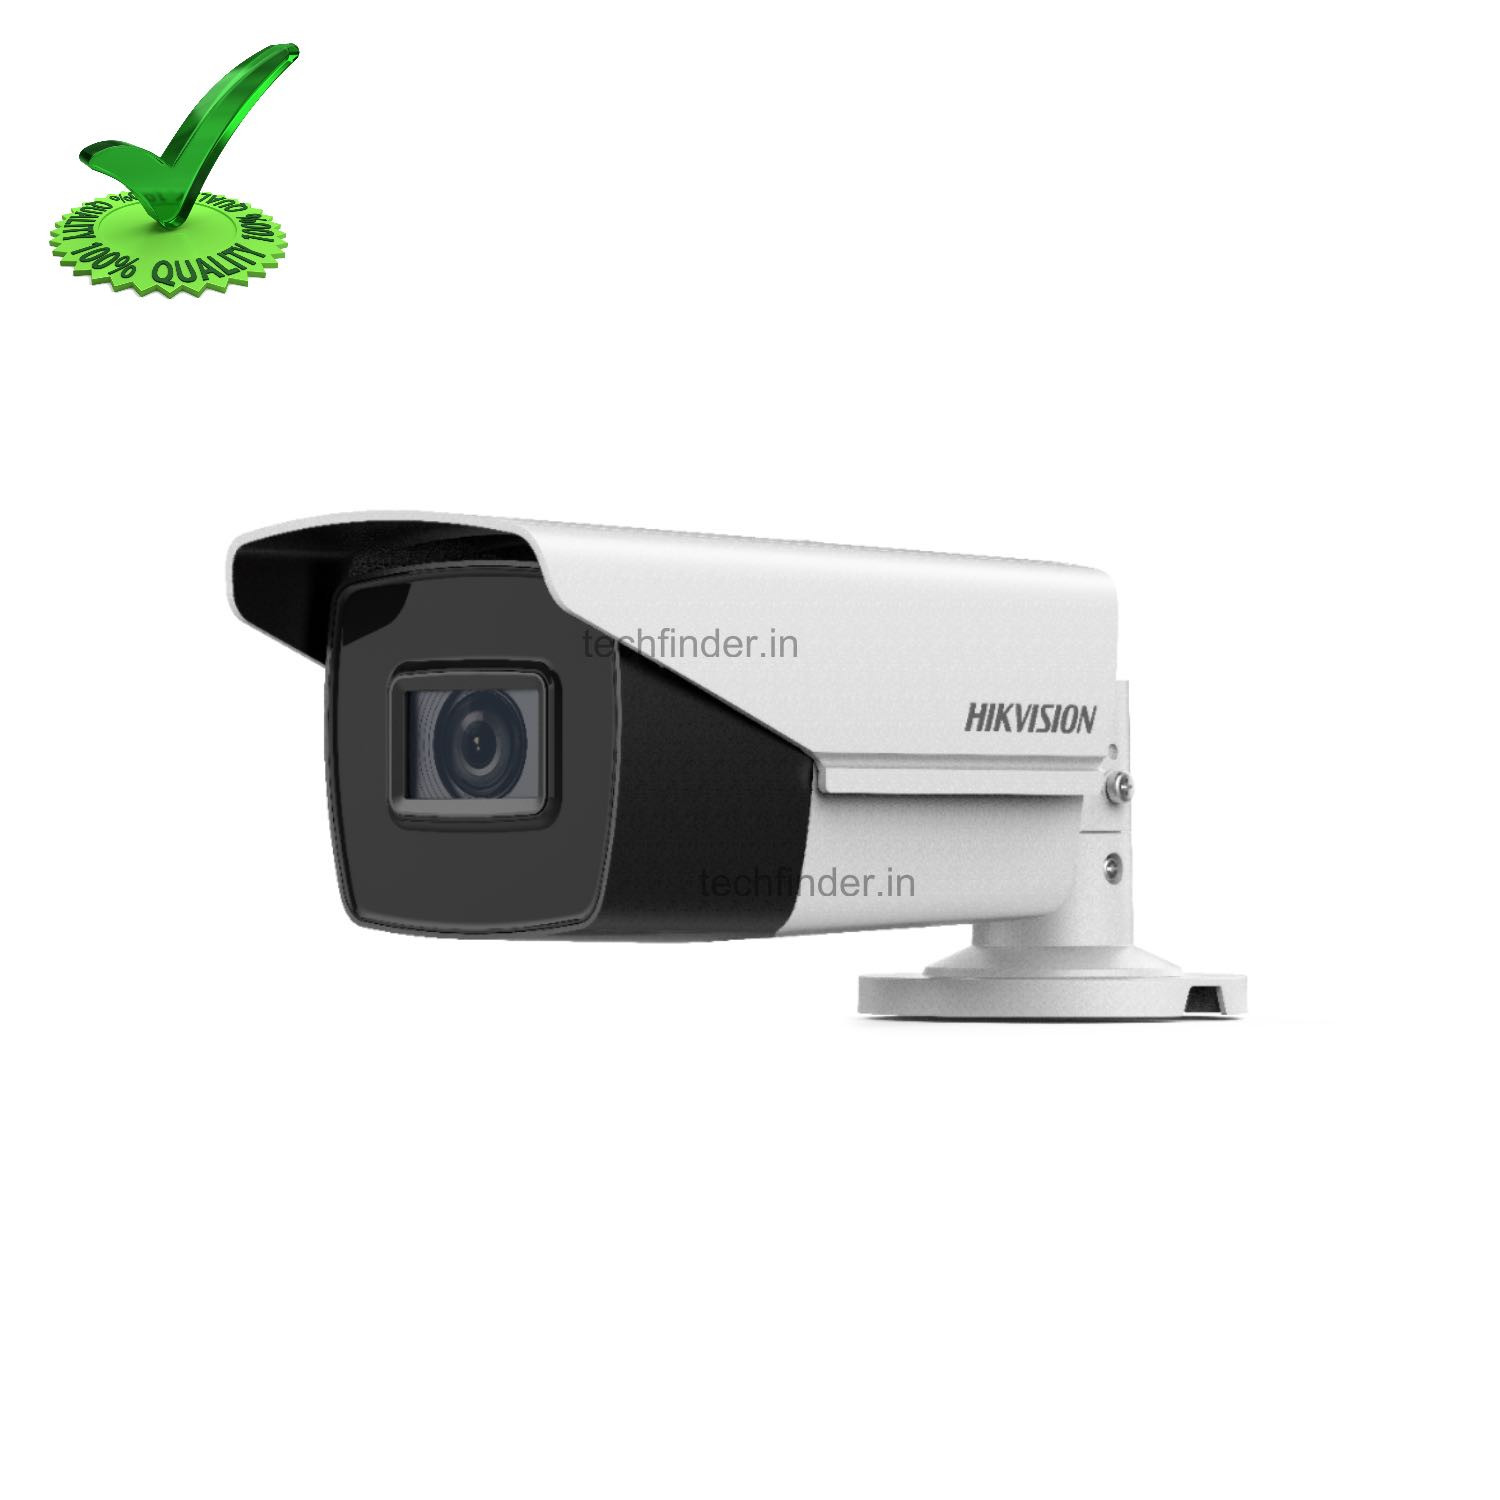 Hikvision DS-2CE19D3T-IT3ZF 2MP Semi Metal HD Bullet Camera